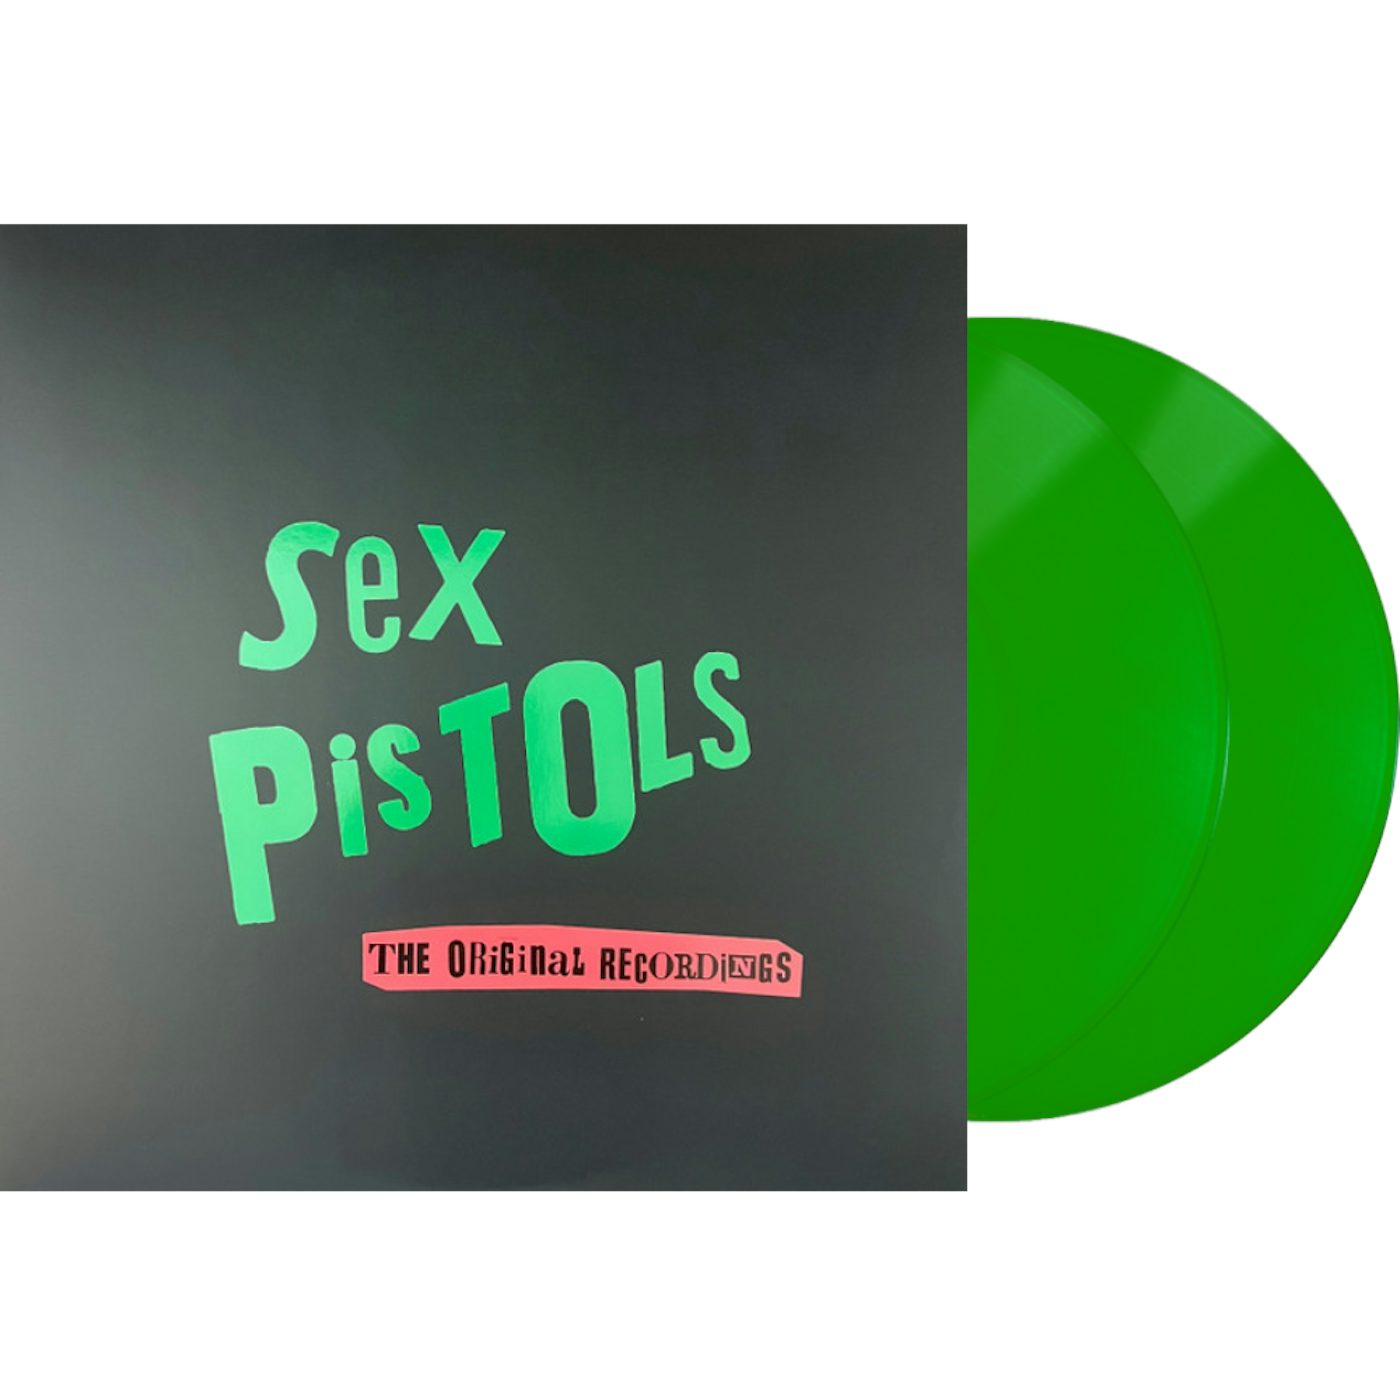 Sex Pistols The Original Recordings Limited Edition 2lp